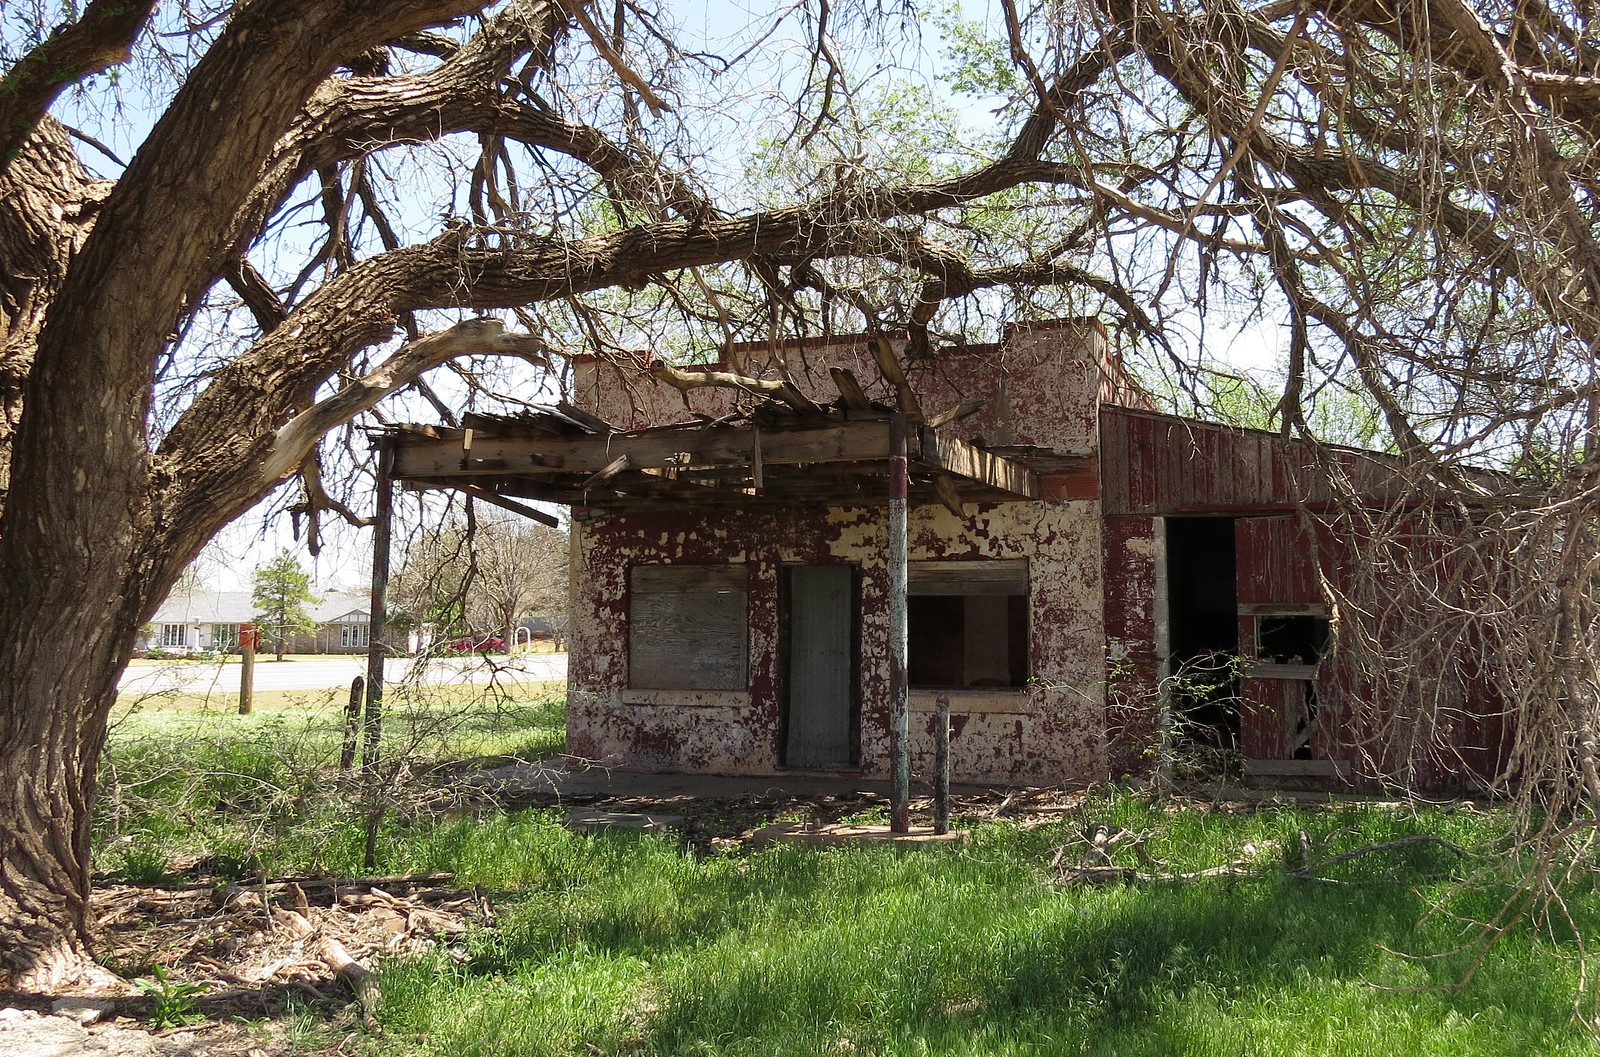 Kobel's Place - on old U.S. Route 66 near Foss, Oklahoma USA - April 30, 2013